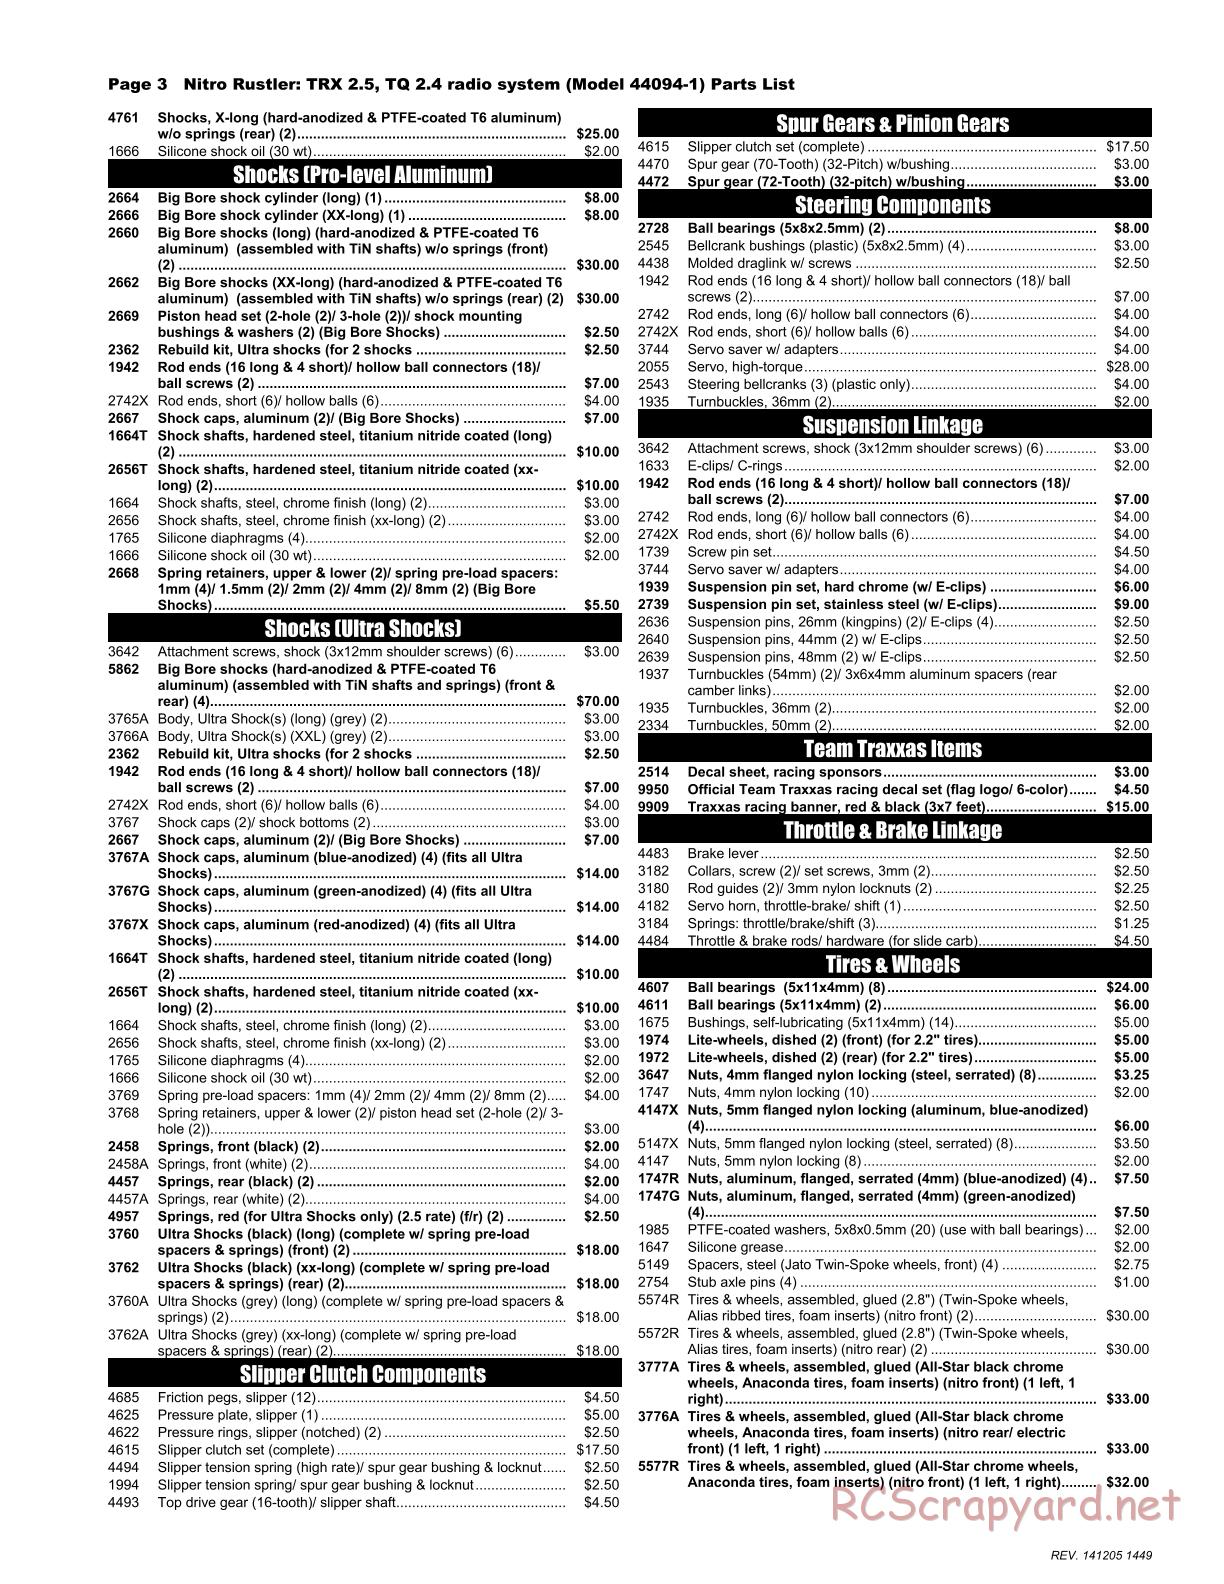 Traxxas - Nitro Rustler (2015) - Parts List - Page 3